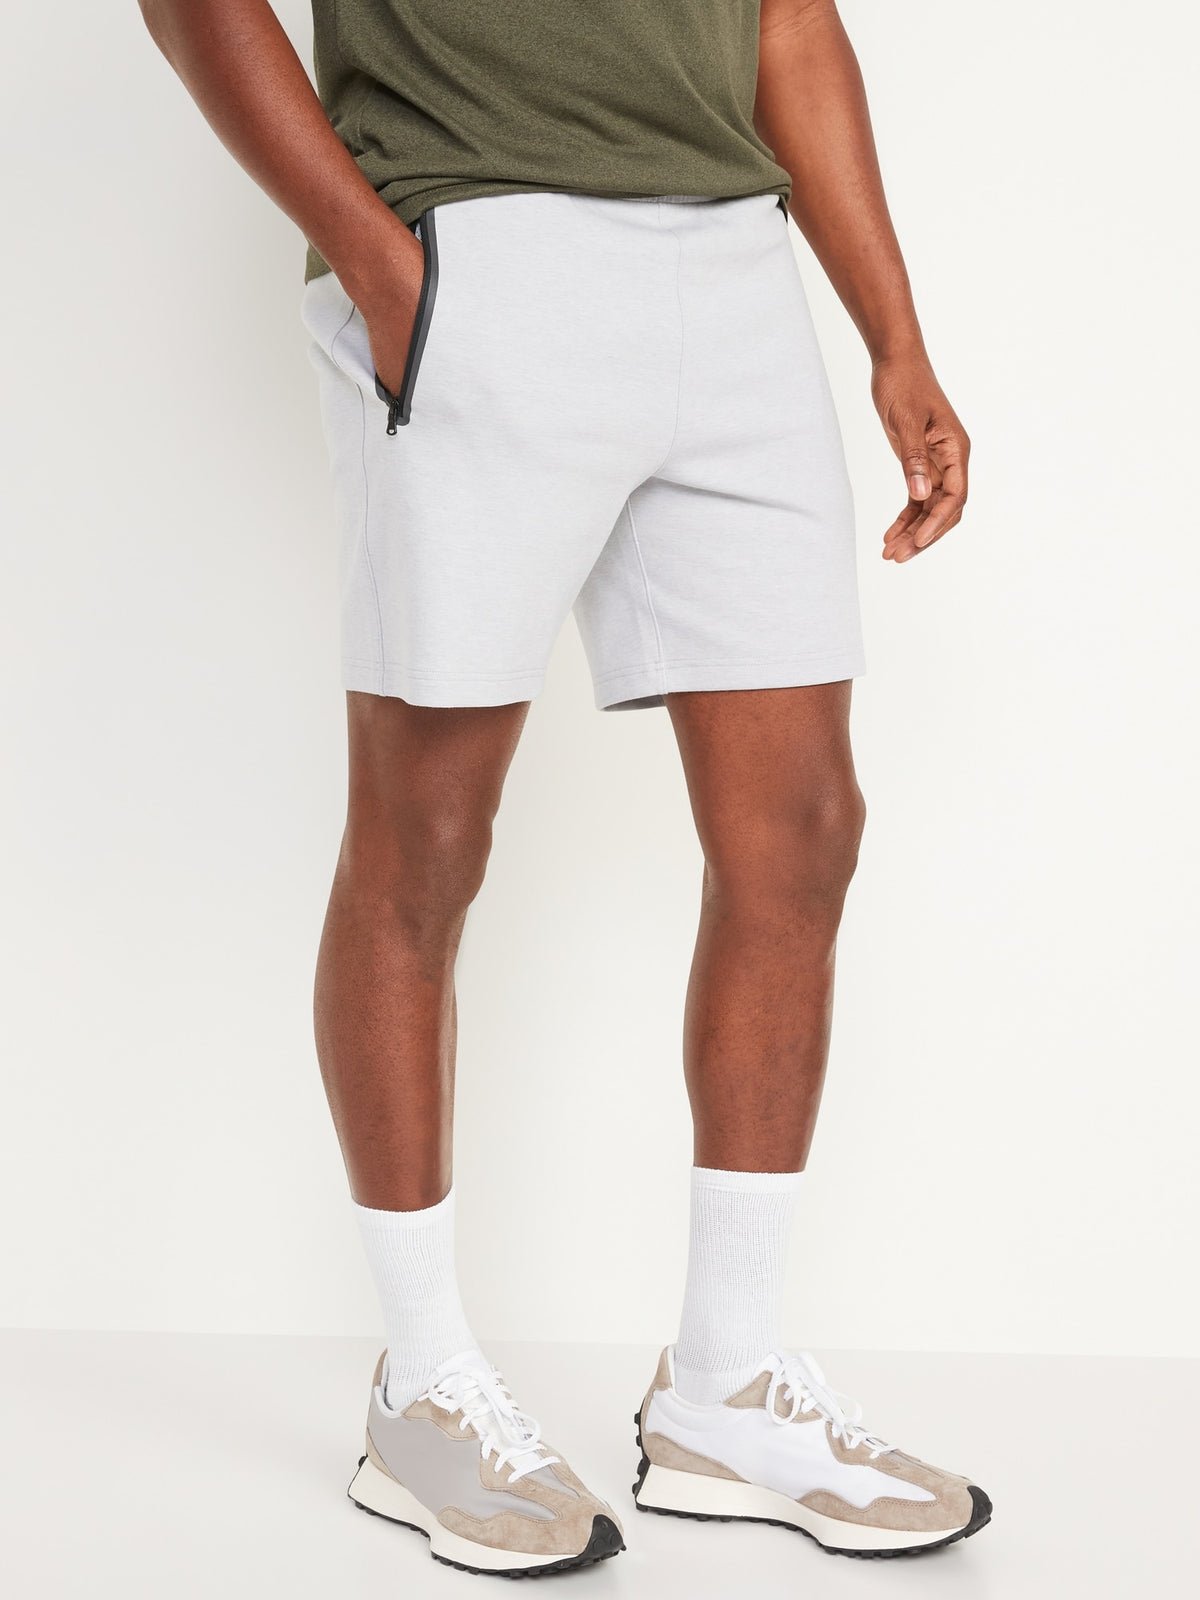 Dynamic Fleece Sweat Shorts for Men --7-inch inseam_LightGrayHeather_1650.jpeg